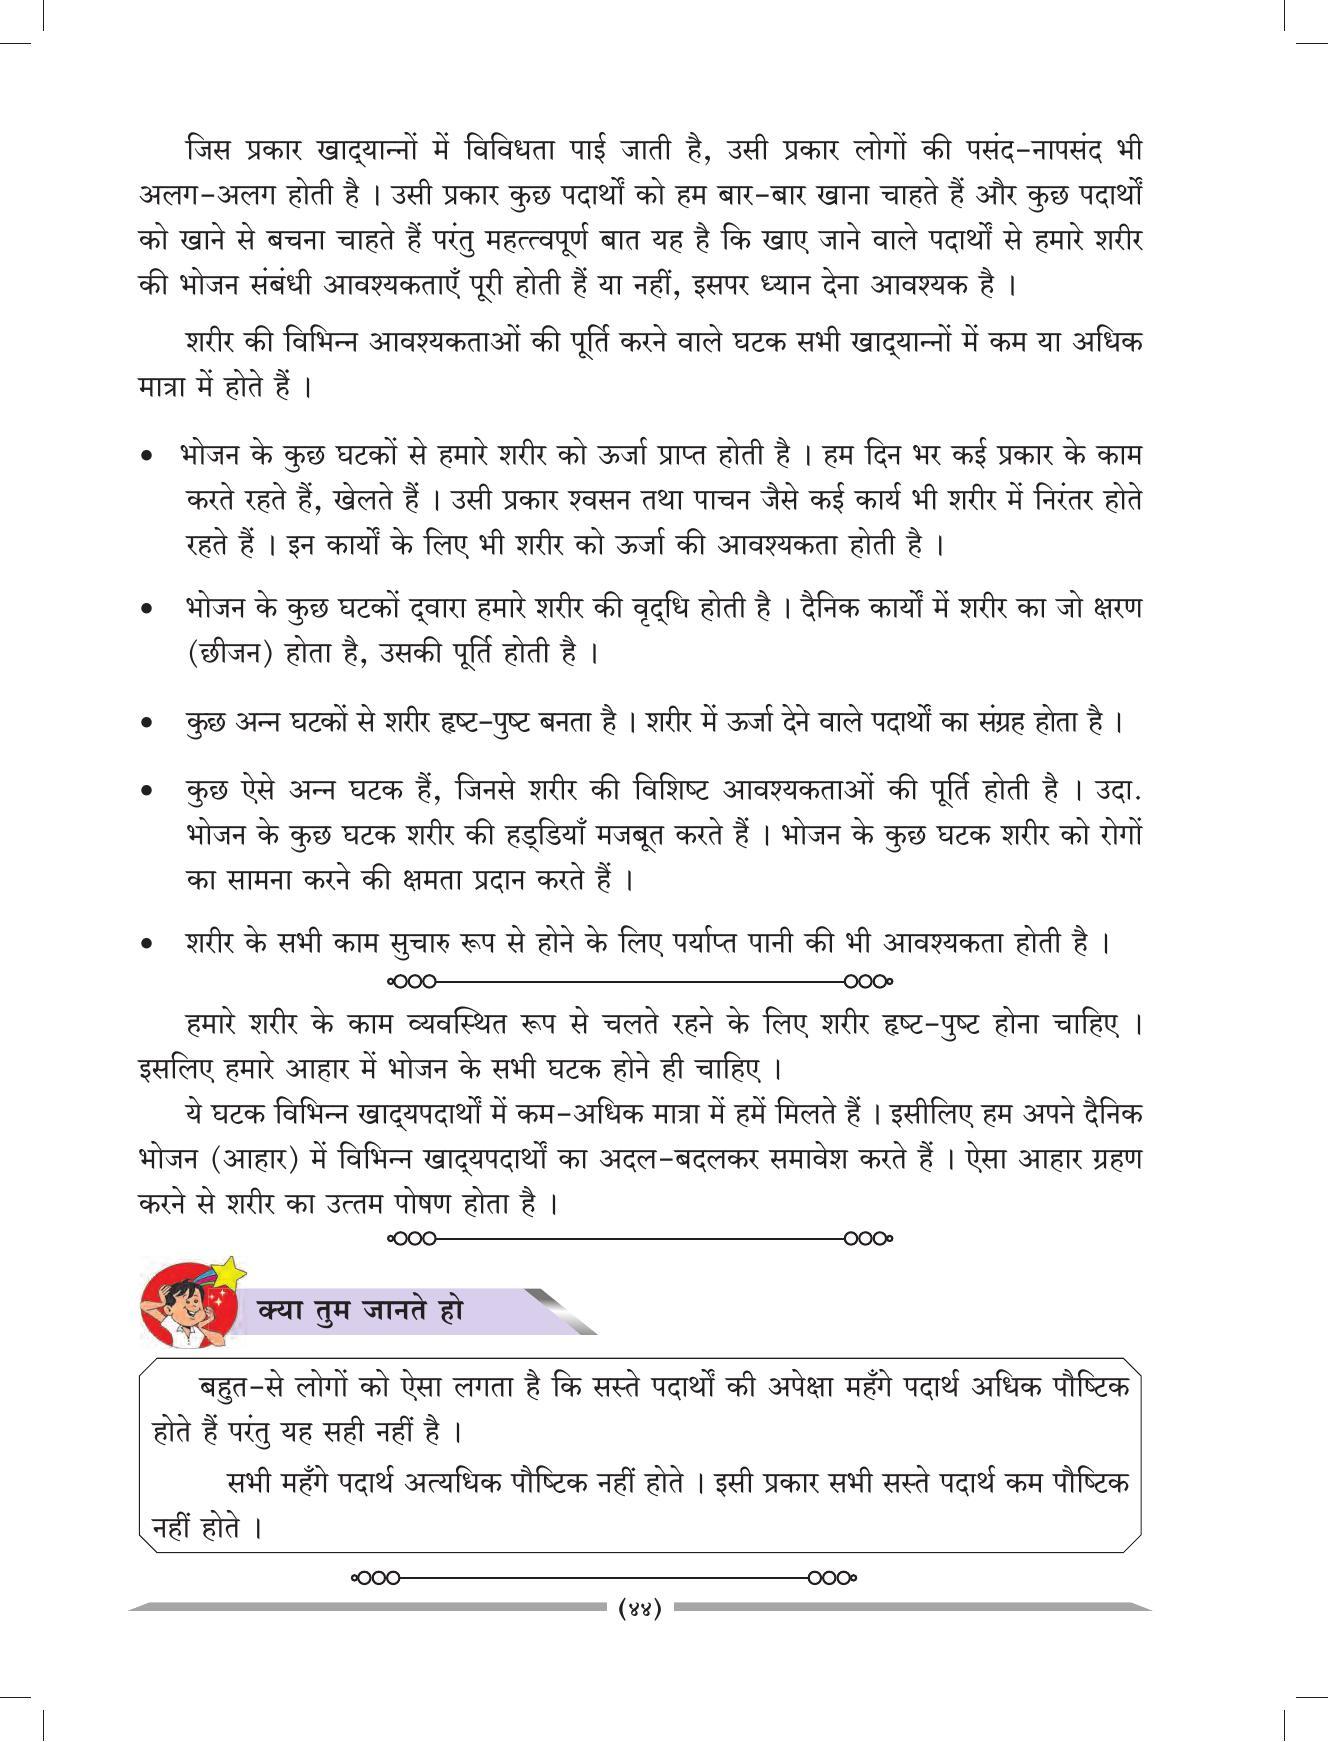 Maharashtra Board Class 4 EVS 1 (Hindi Medium) Textbook - Page 54